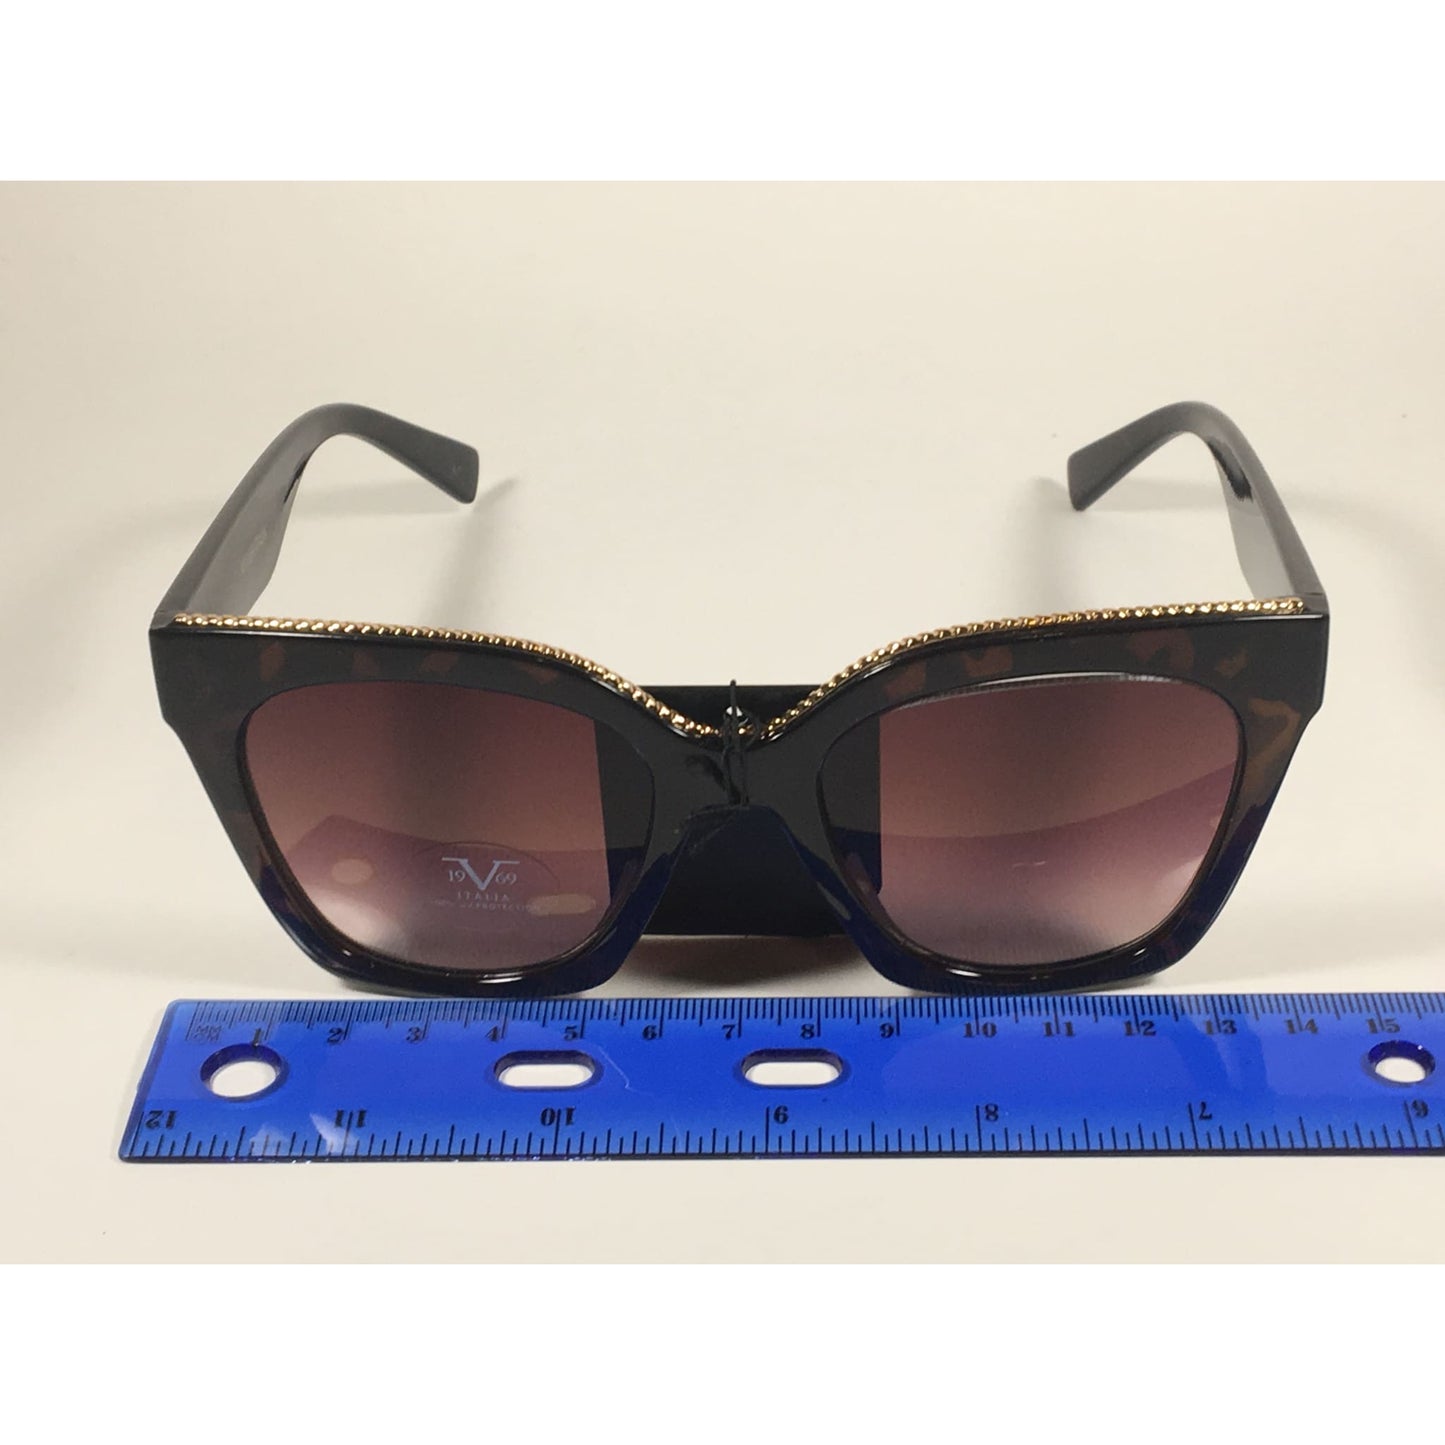 Versace 19V69 Italia Enza Square Sunglasses Brown Tortoise Brown Gradient Lens - Sunglasses